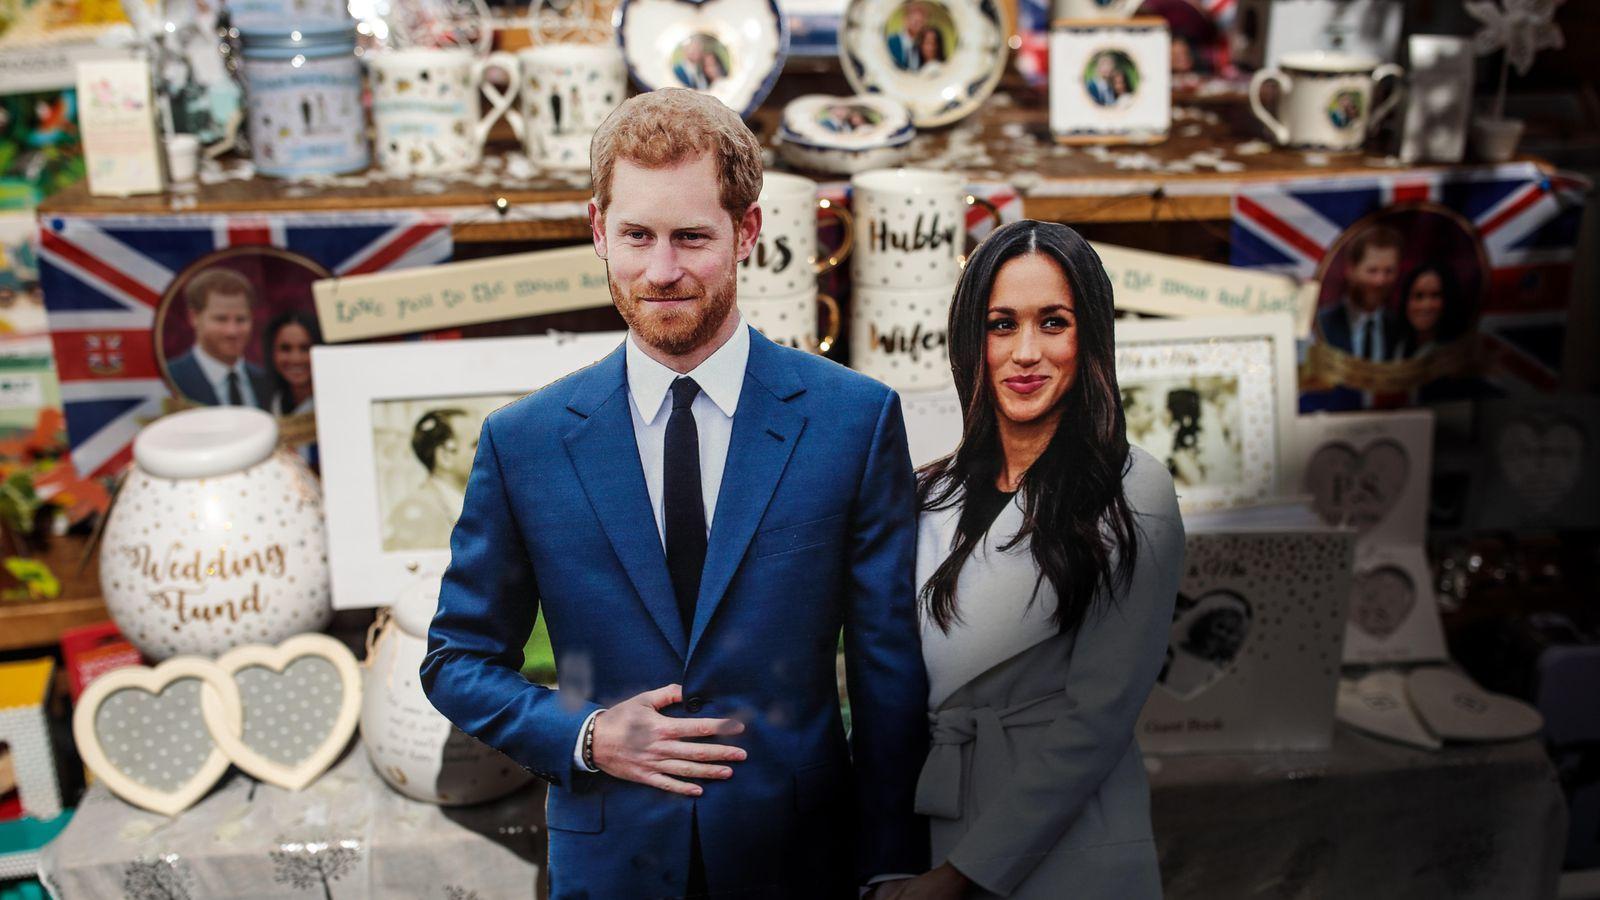 Royal wedding 2018 countdown: Prince Harry and Meghan Markle are